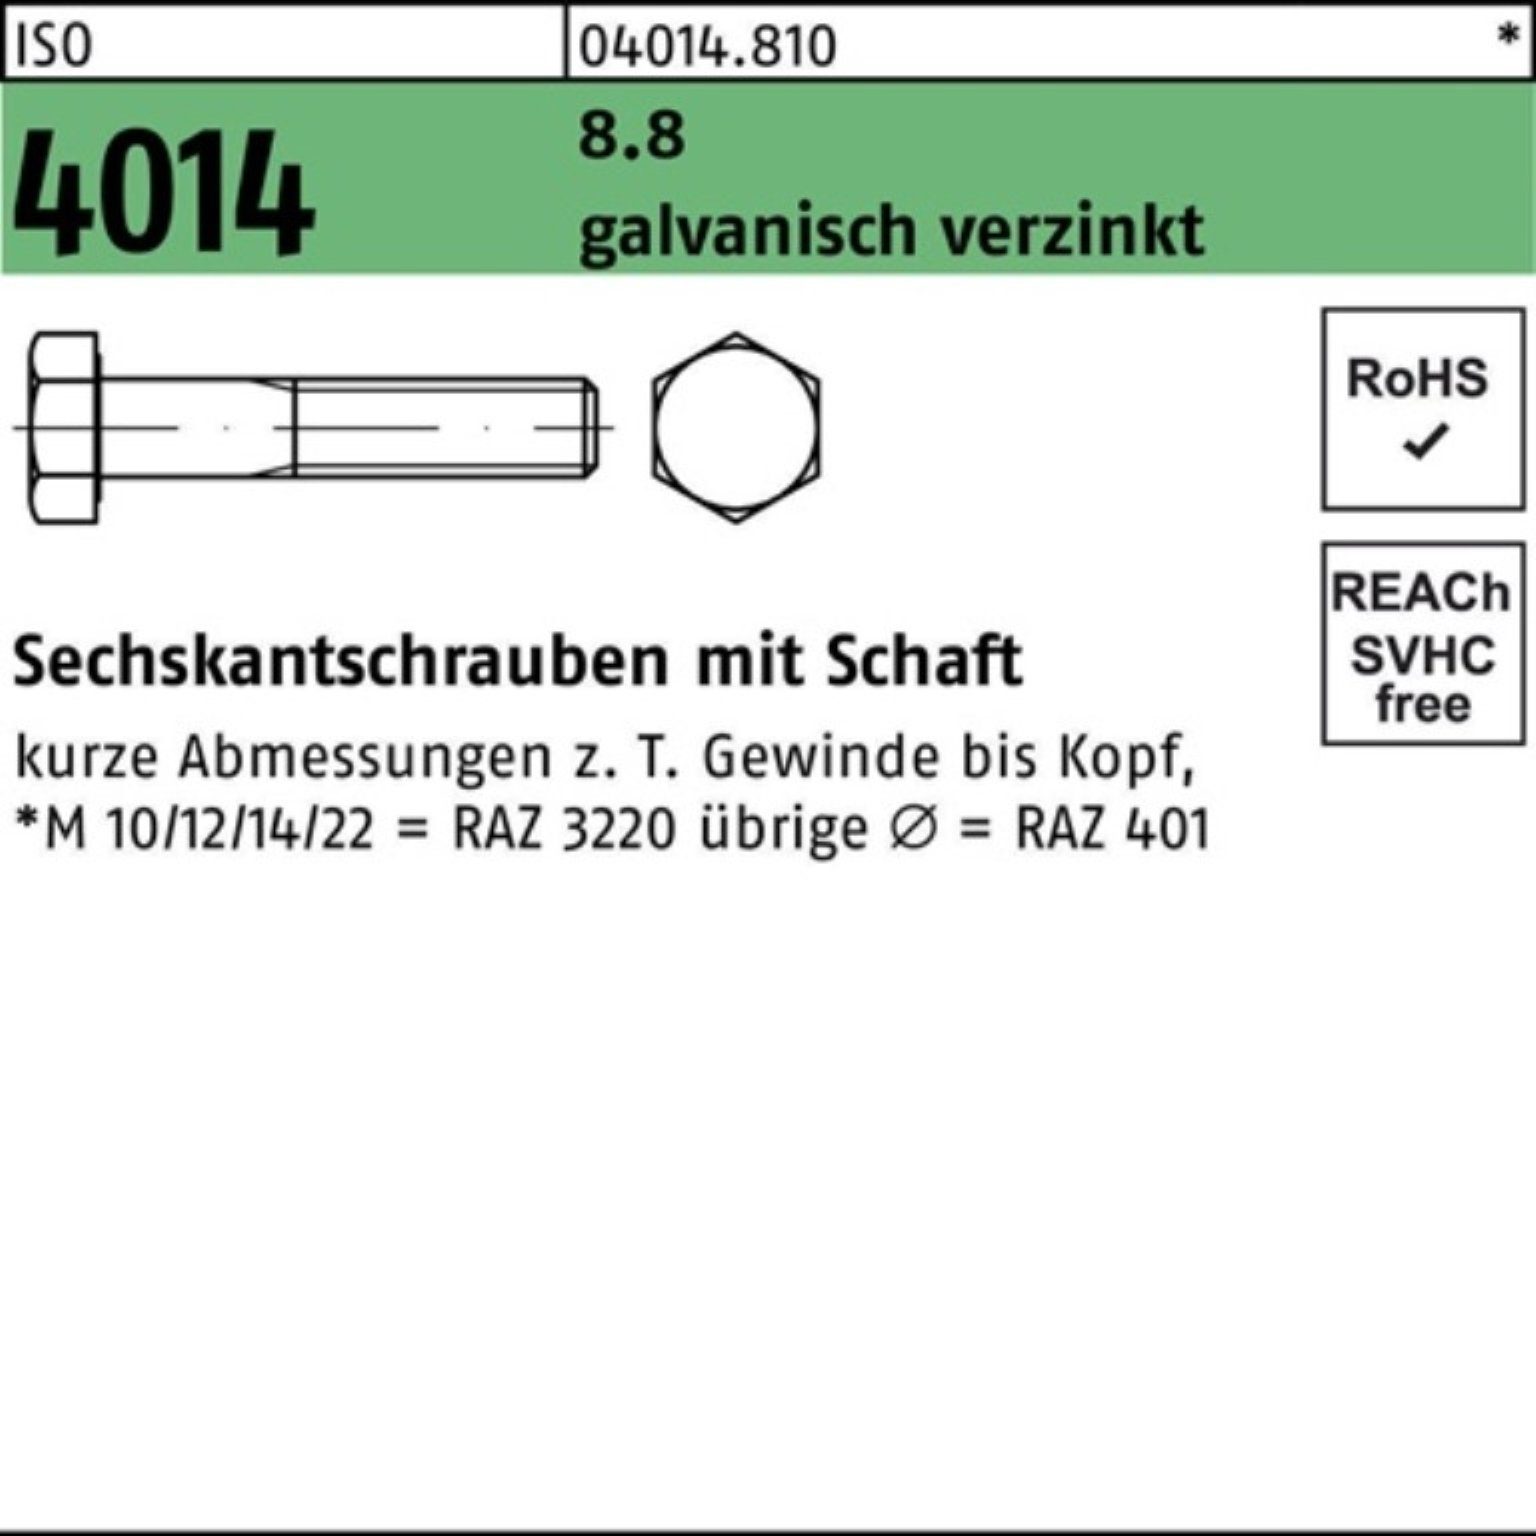 Bufab Sechskantschraube 100er Pack Sechskantschraube ISO 4014 Schaft M48x 200 8.8 galv.verz. 1 | Schrauben